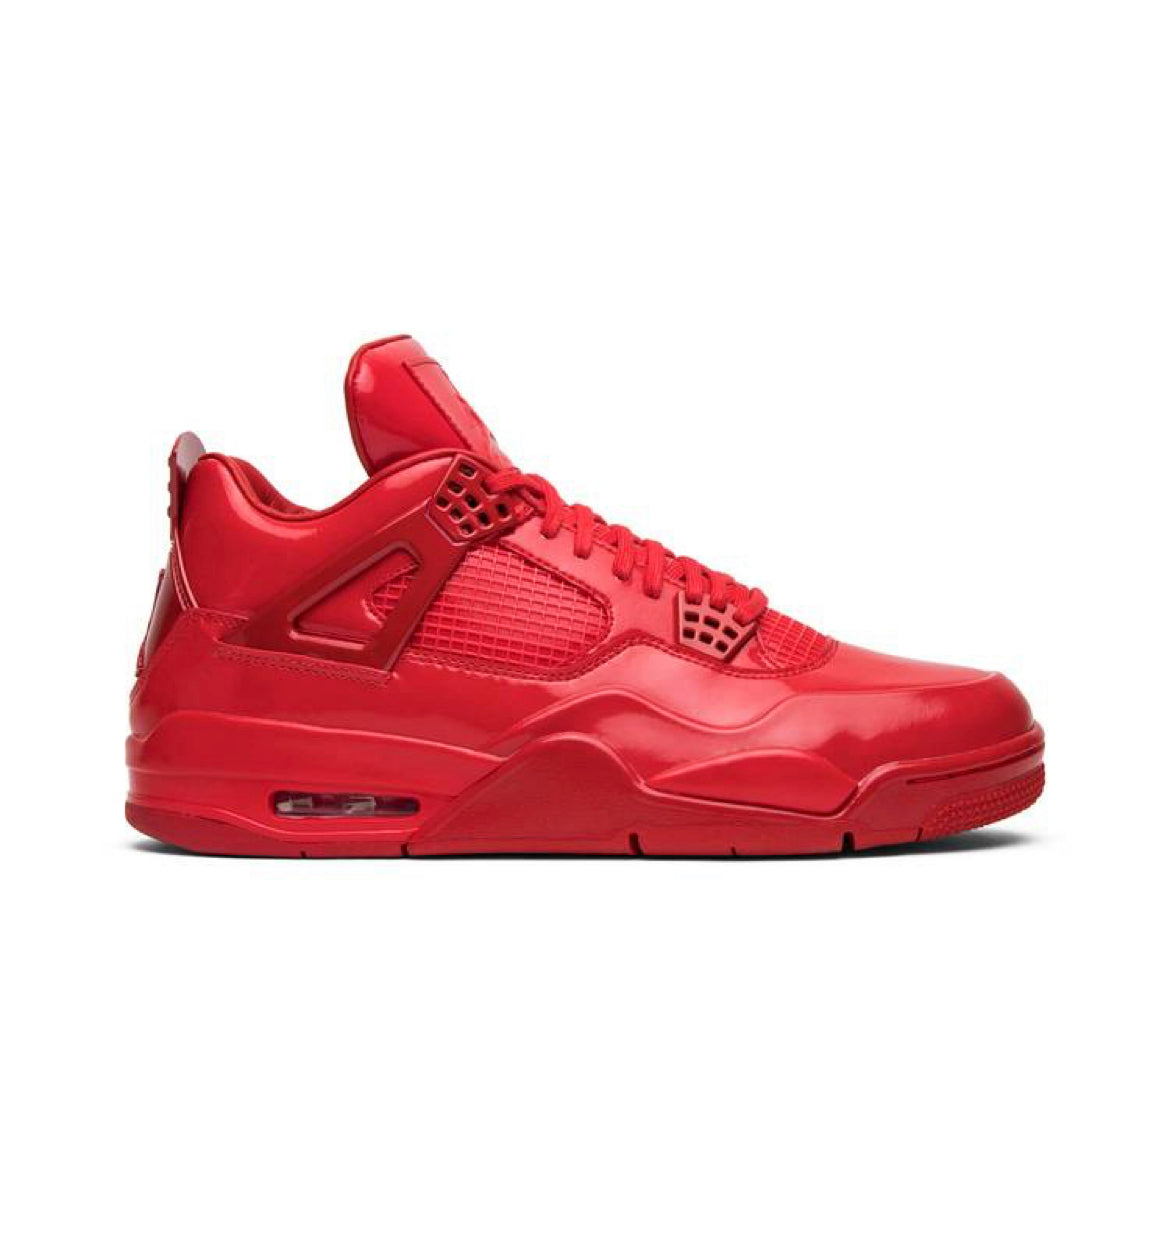 Jordan 4 Retro ‘11Lab4 Red’ 719864-600 (gently used - no box)